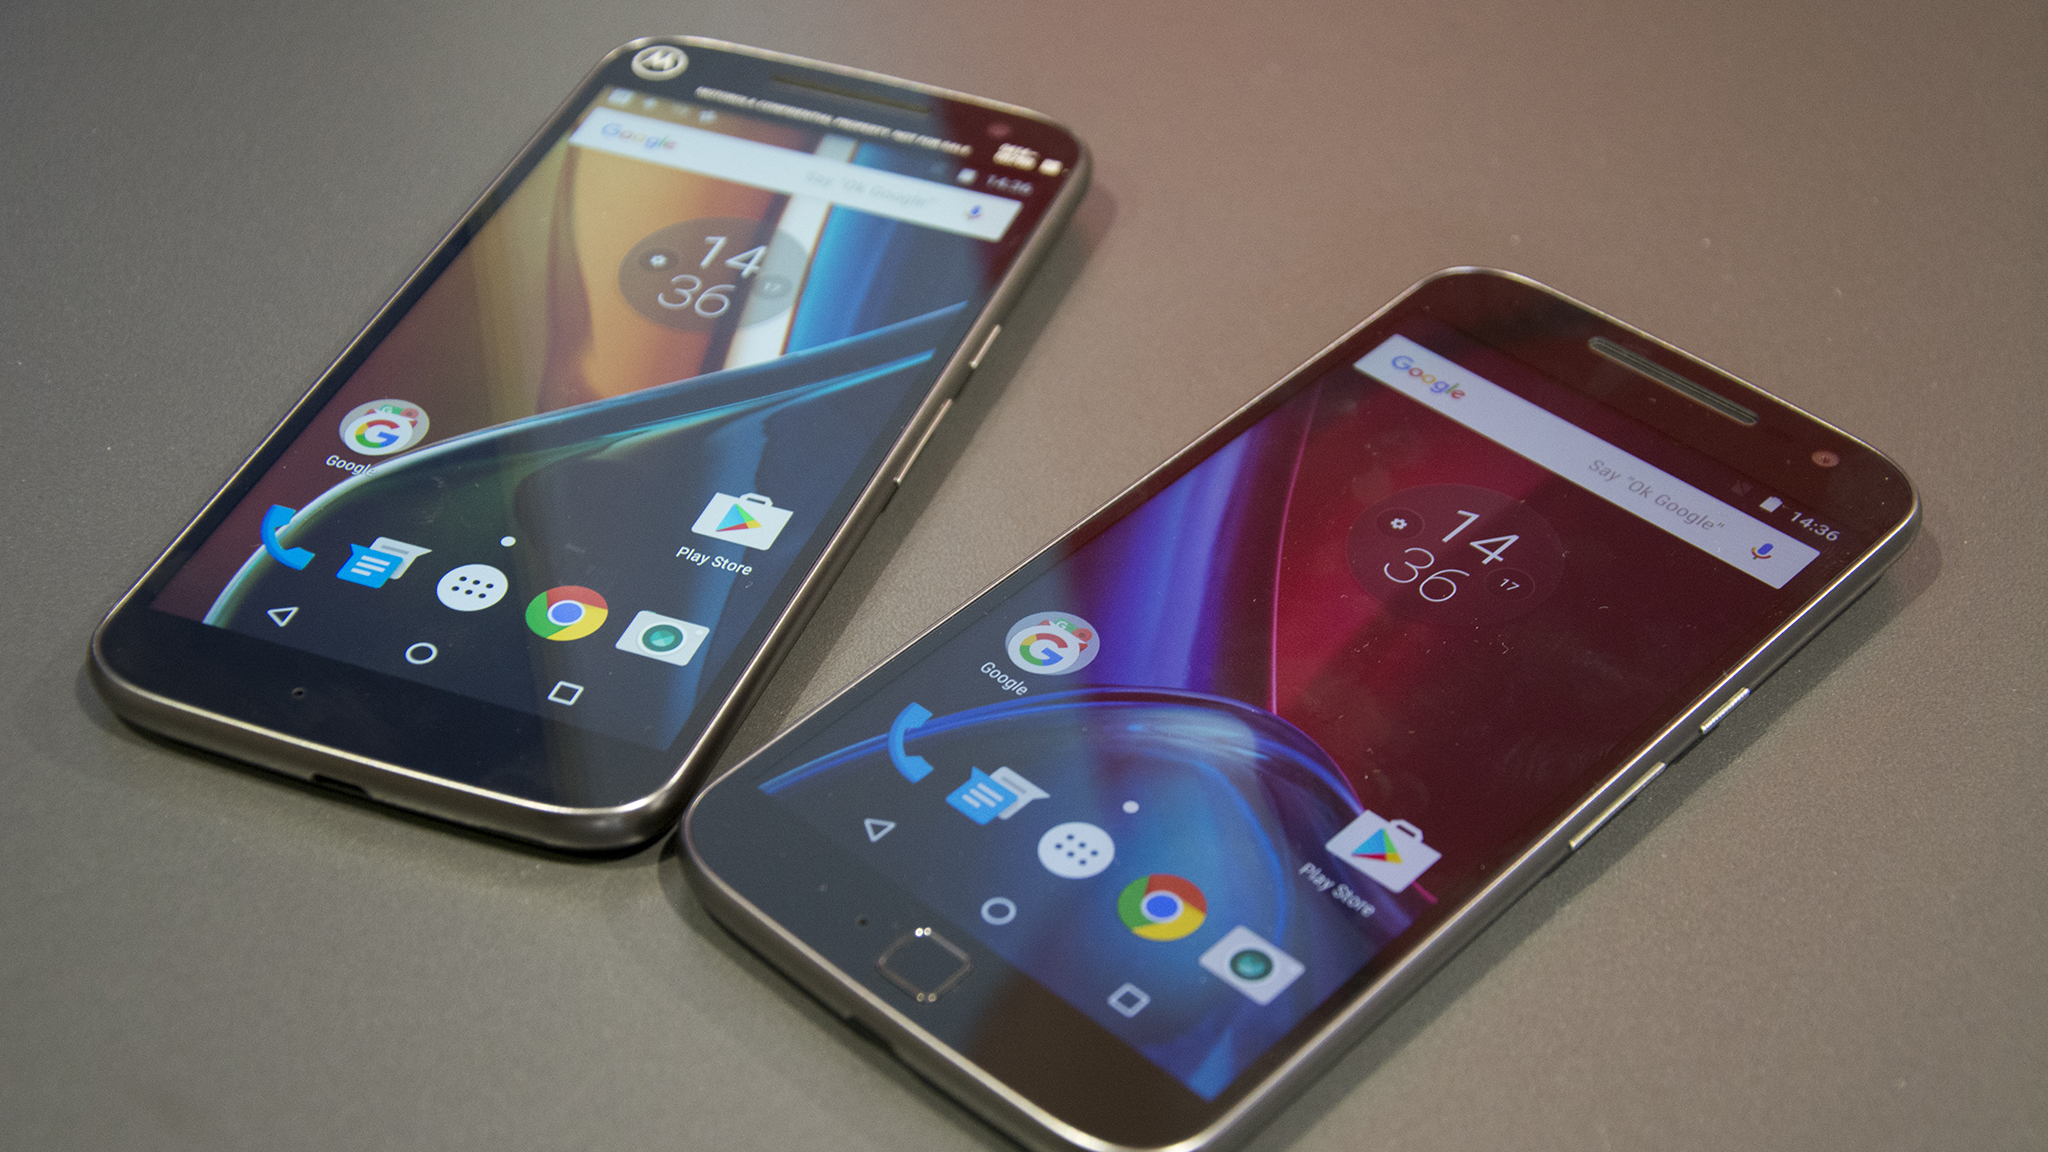 Grens Gelukkig is dat Krankzinnigheid Motorola Moto G4 and G4 Plus review (Hands-on): Don't call it the Moto G  (4th Gen)